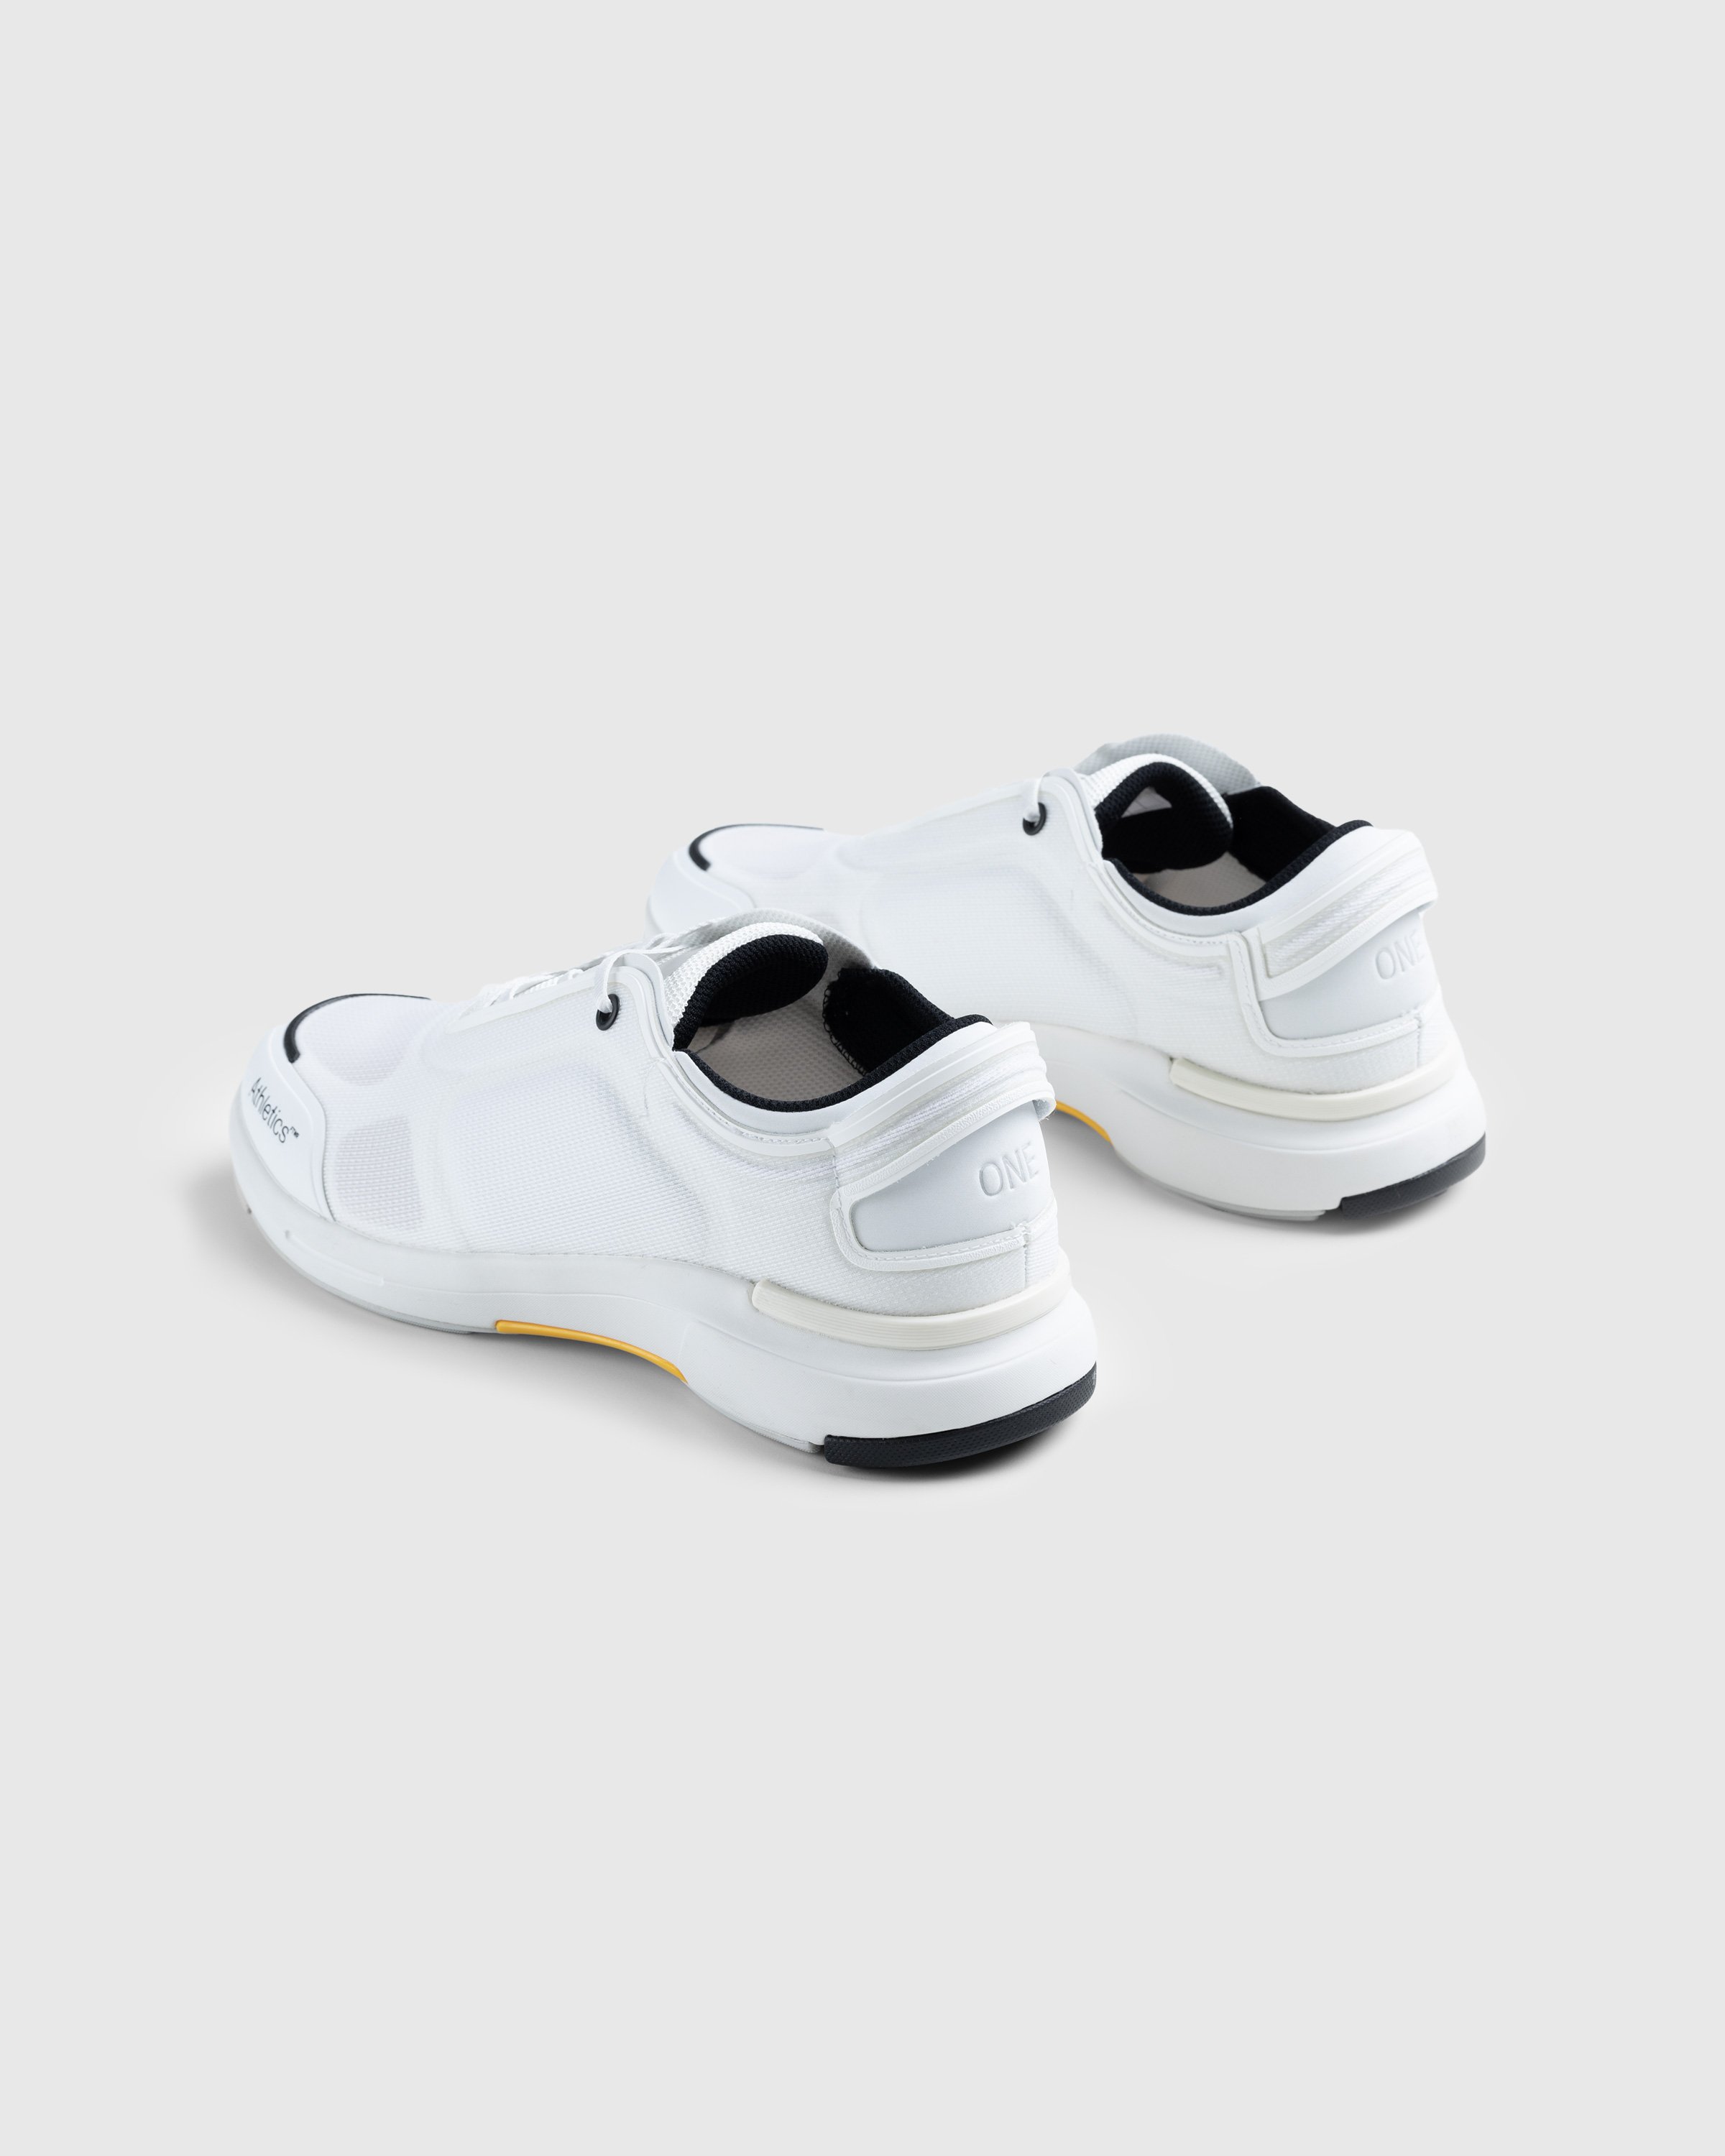 Athletics Footwear - One White - Footwear - White - Image 4